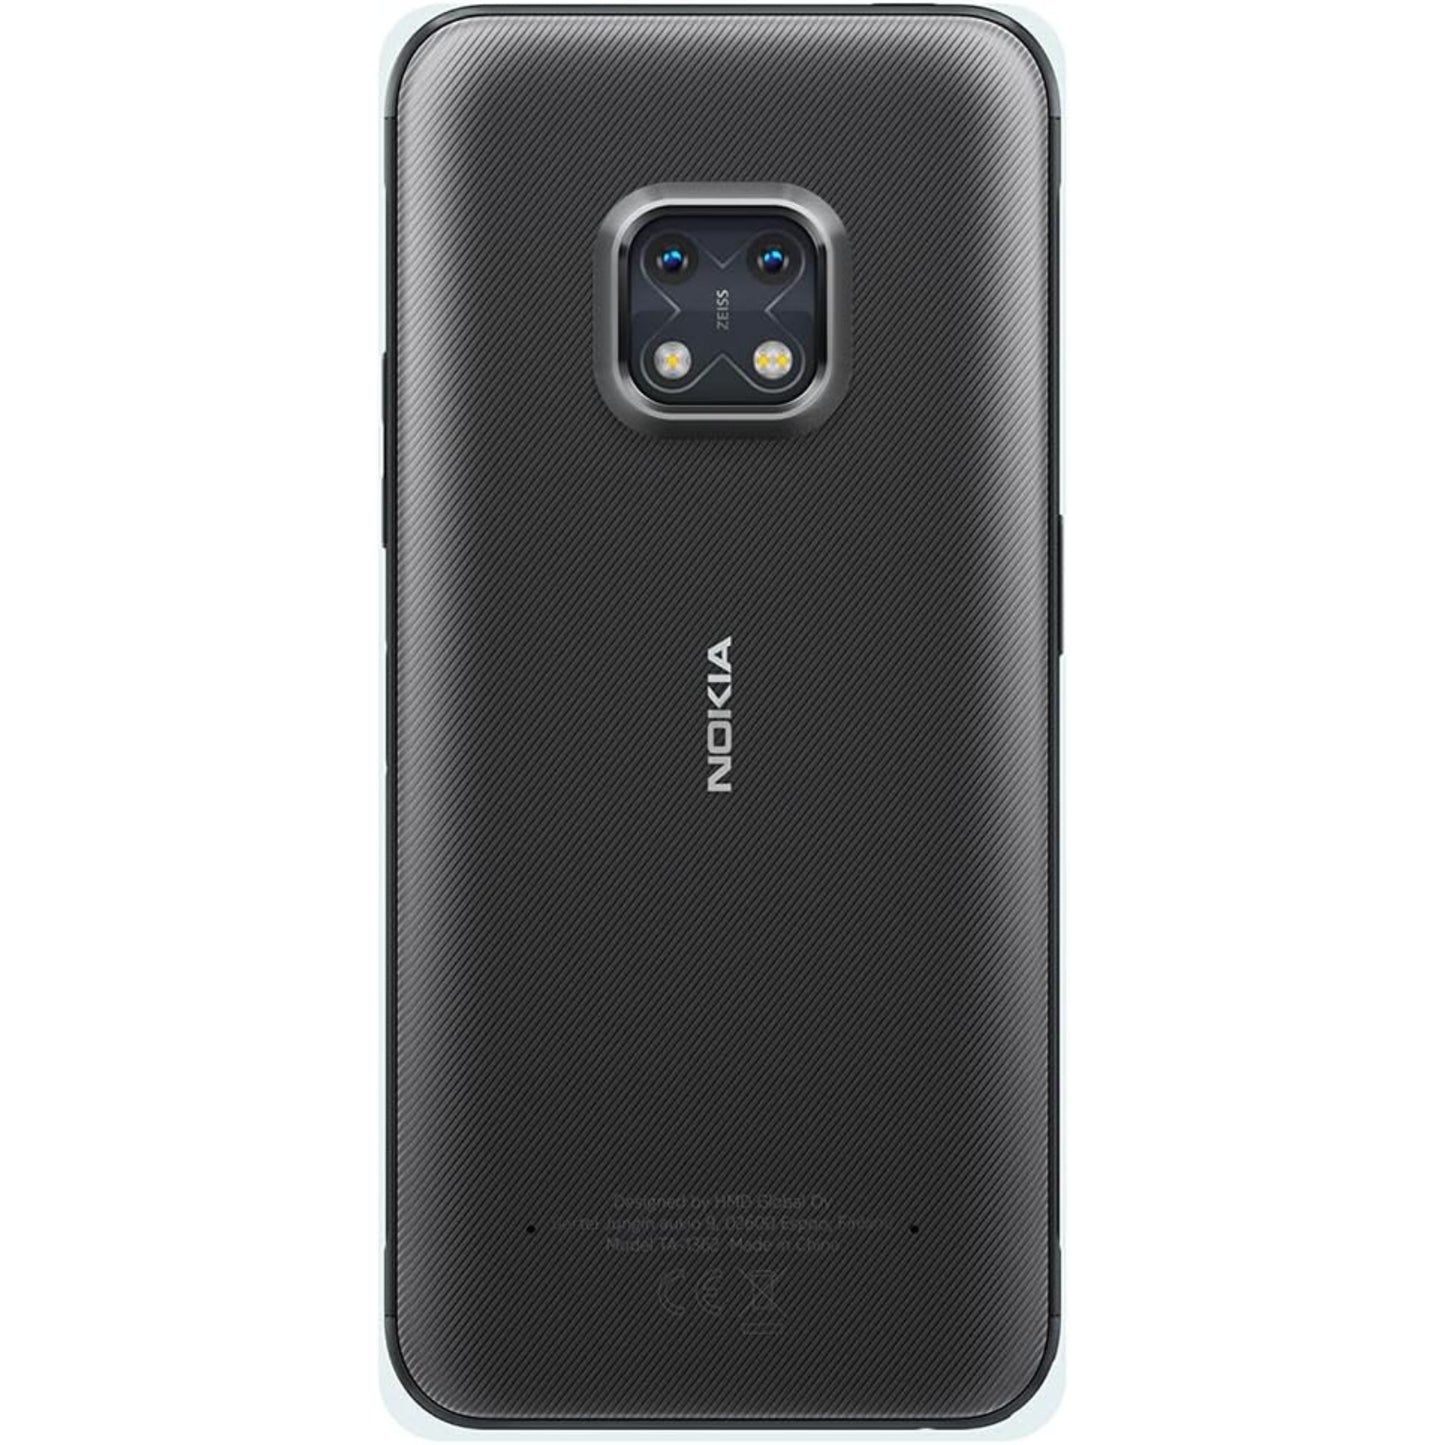 Nokia XR20 5G Dual Nano sim TA-1362 (6GB ram) - MyMobile